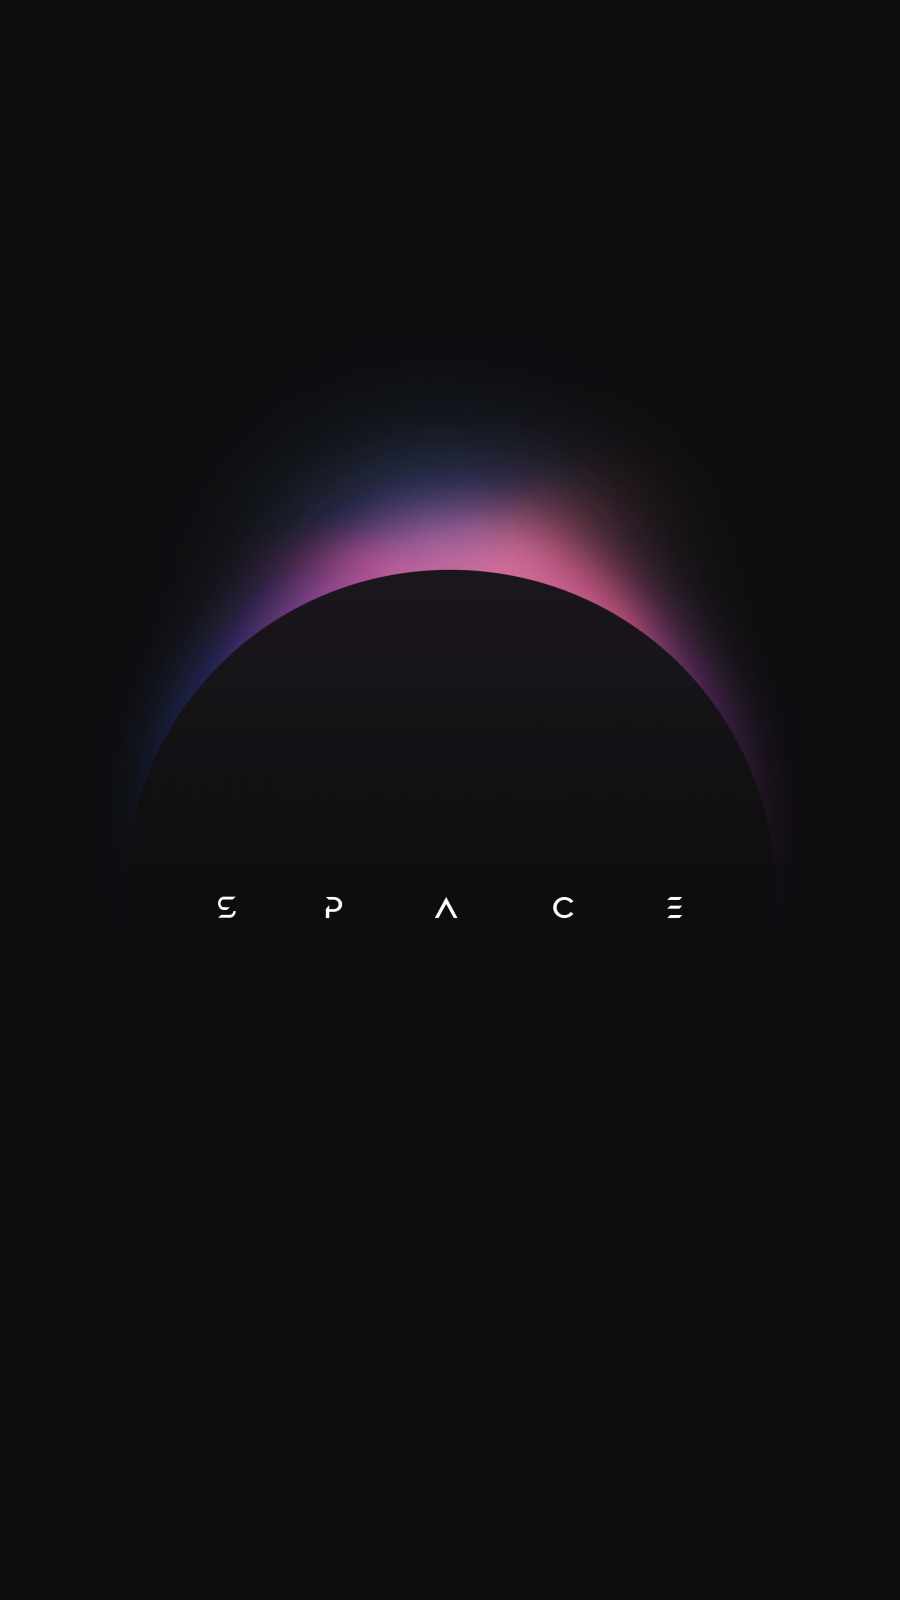 Space Explore IPhone Wallpaper Wallpaper, iPhone Wallpaper